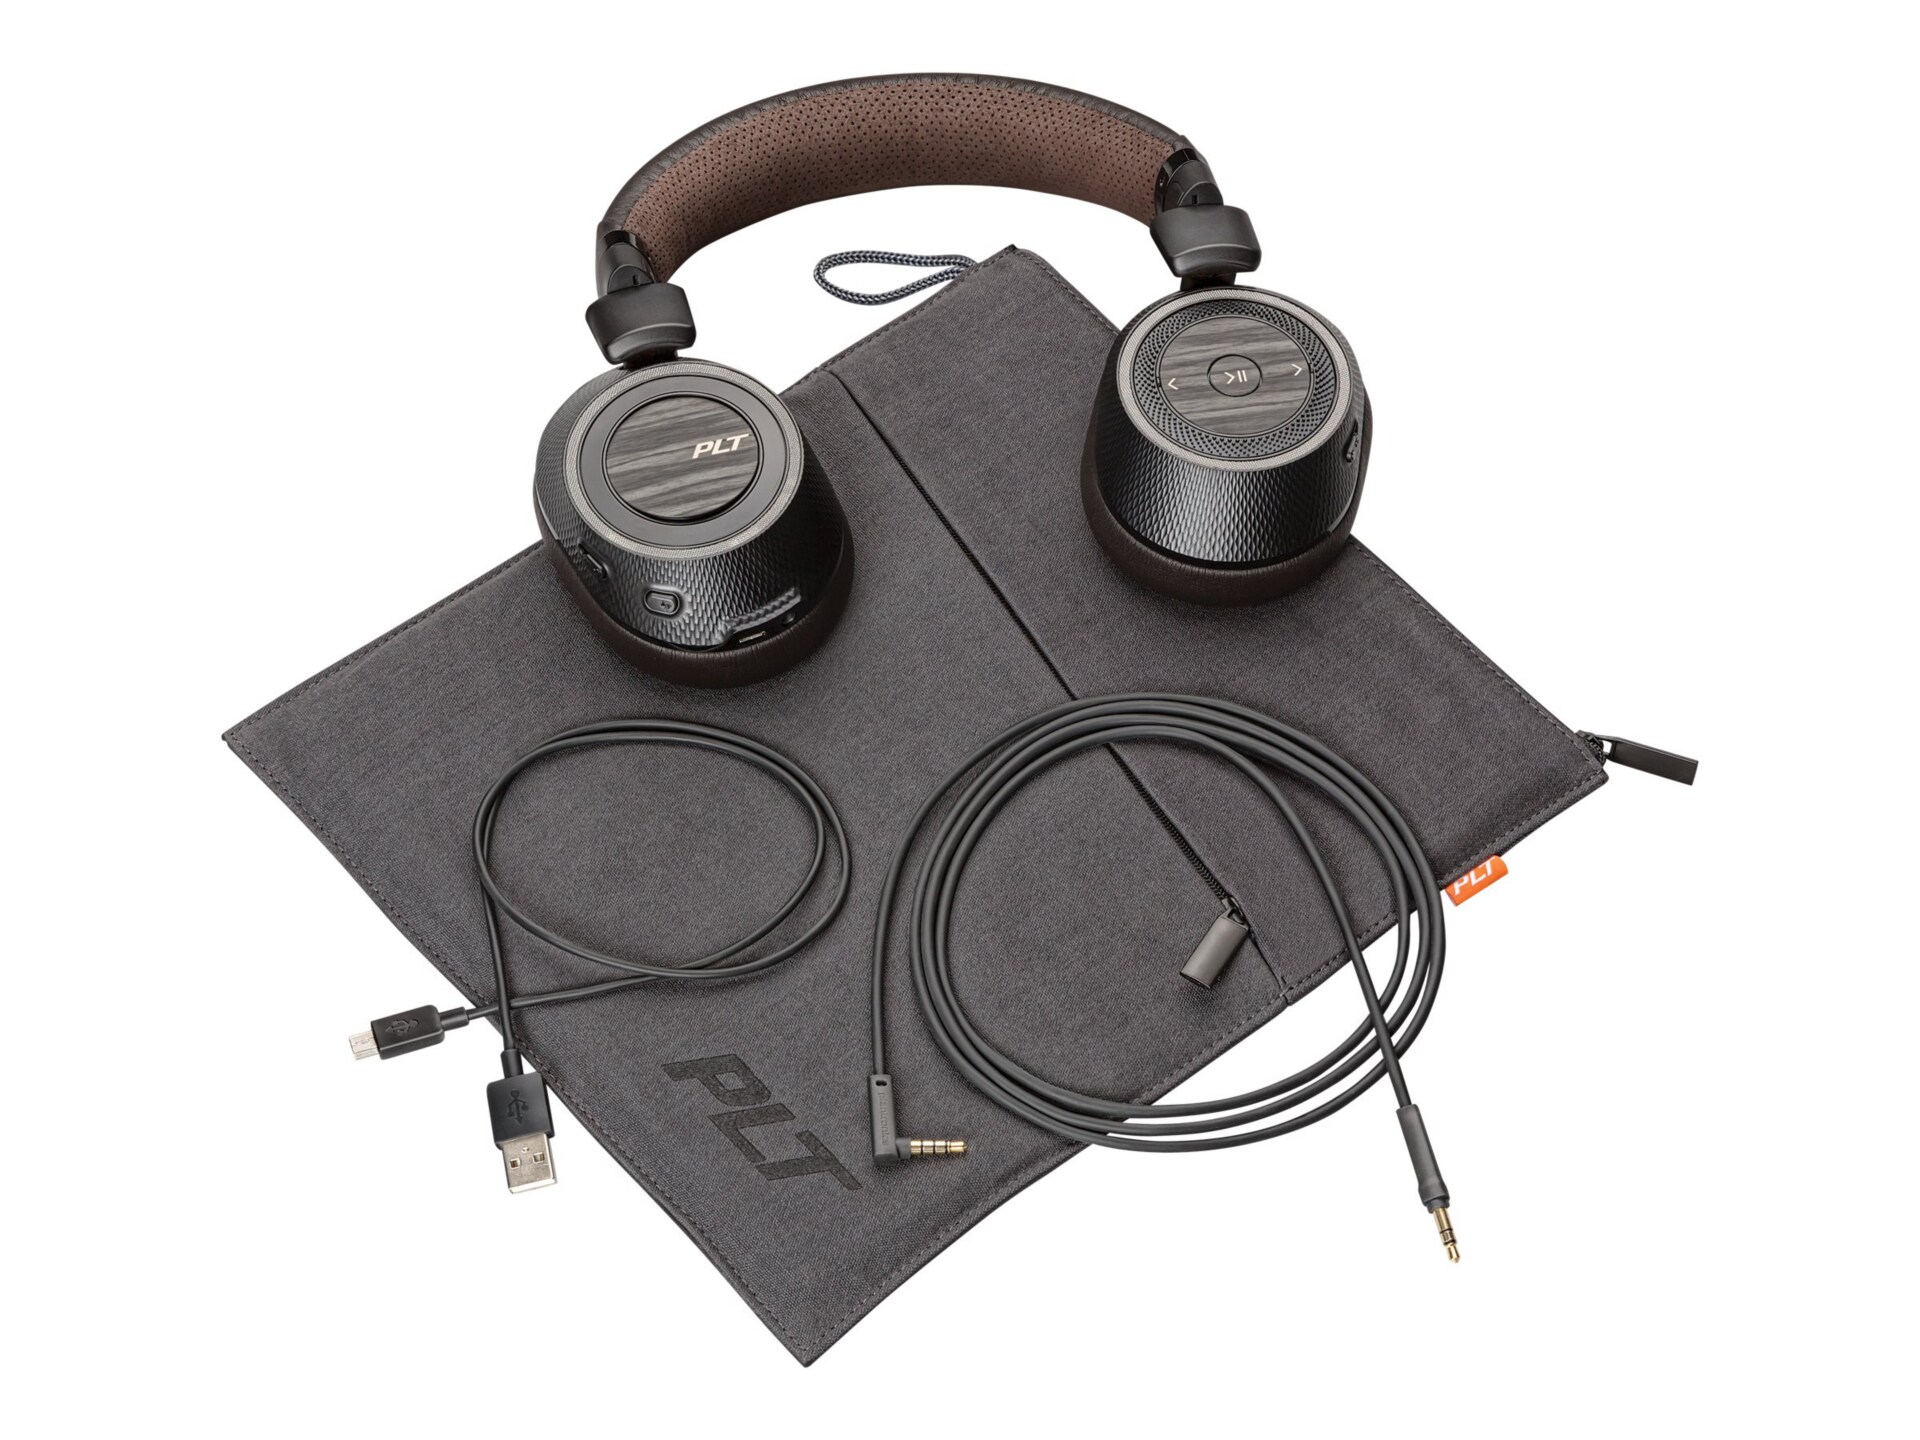 Poly - Plantronics Backbeat Pro 2 - headphones with mic